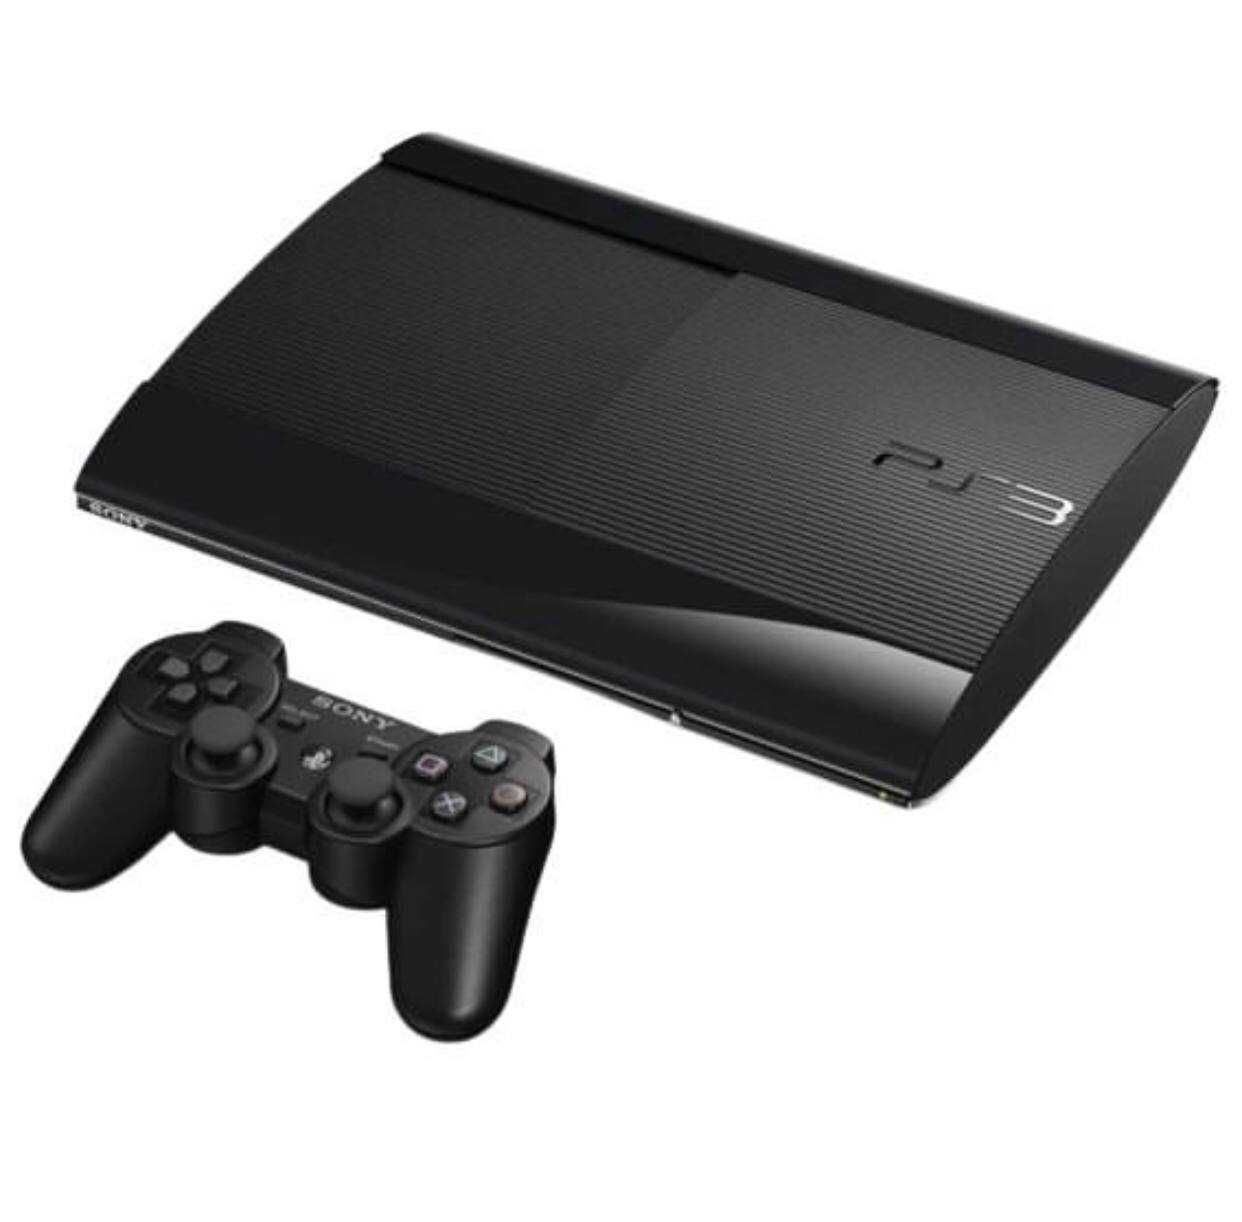 Sony PlayStation 3 Slim / Pro + с Играми и с Доставкой в СКИДКА !